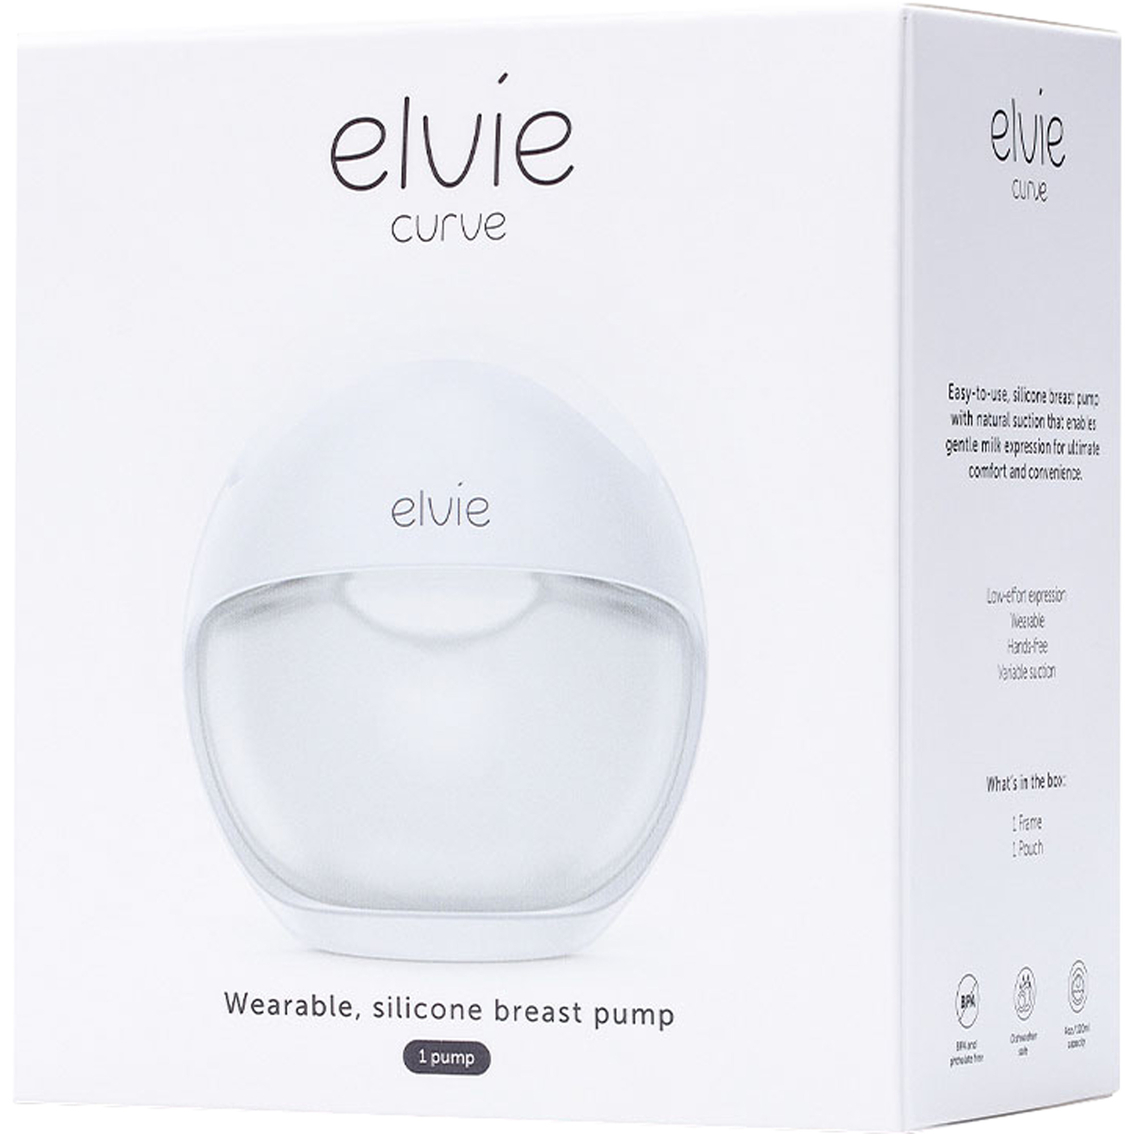 Elvie Curve Manual Breast Pump - Image 1 of 8